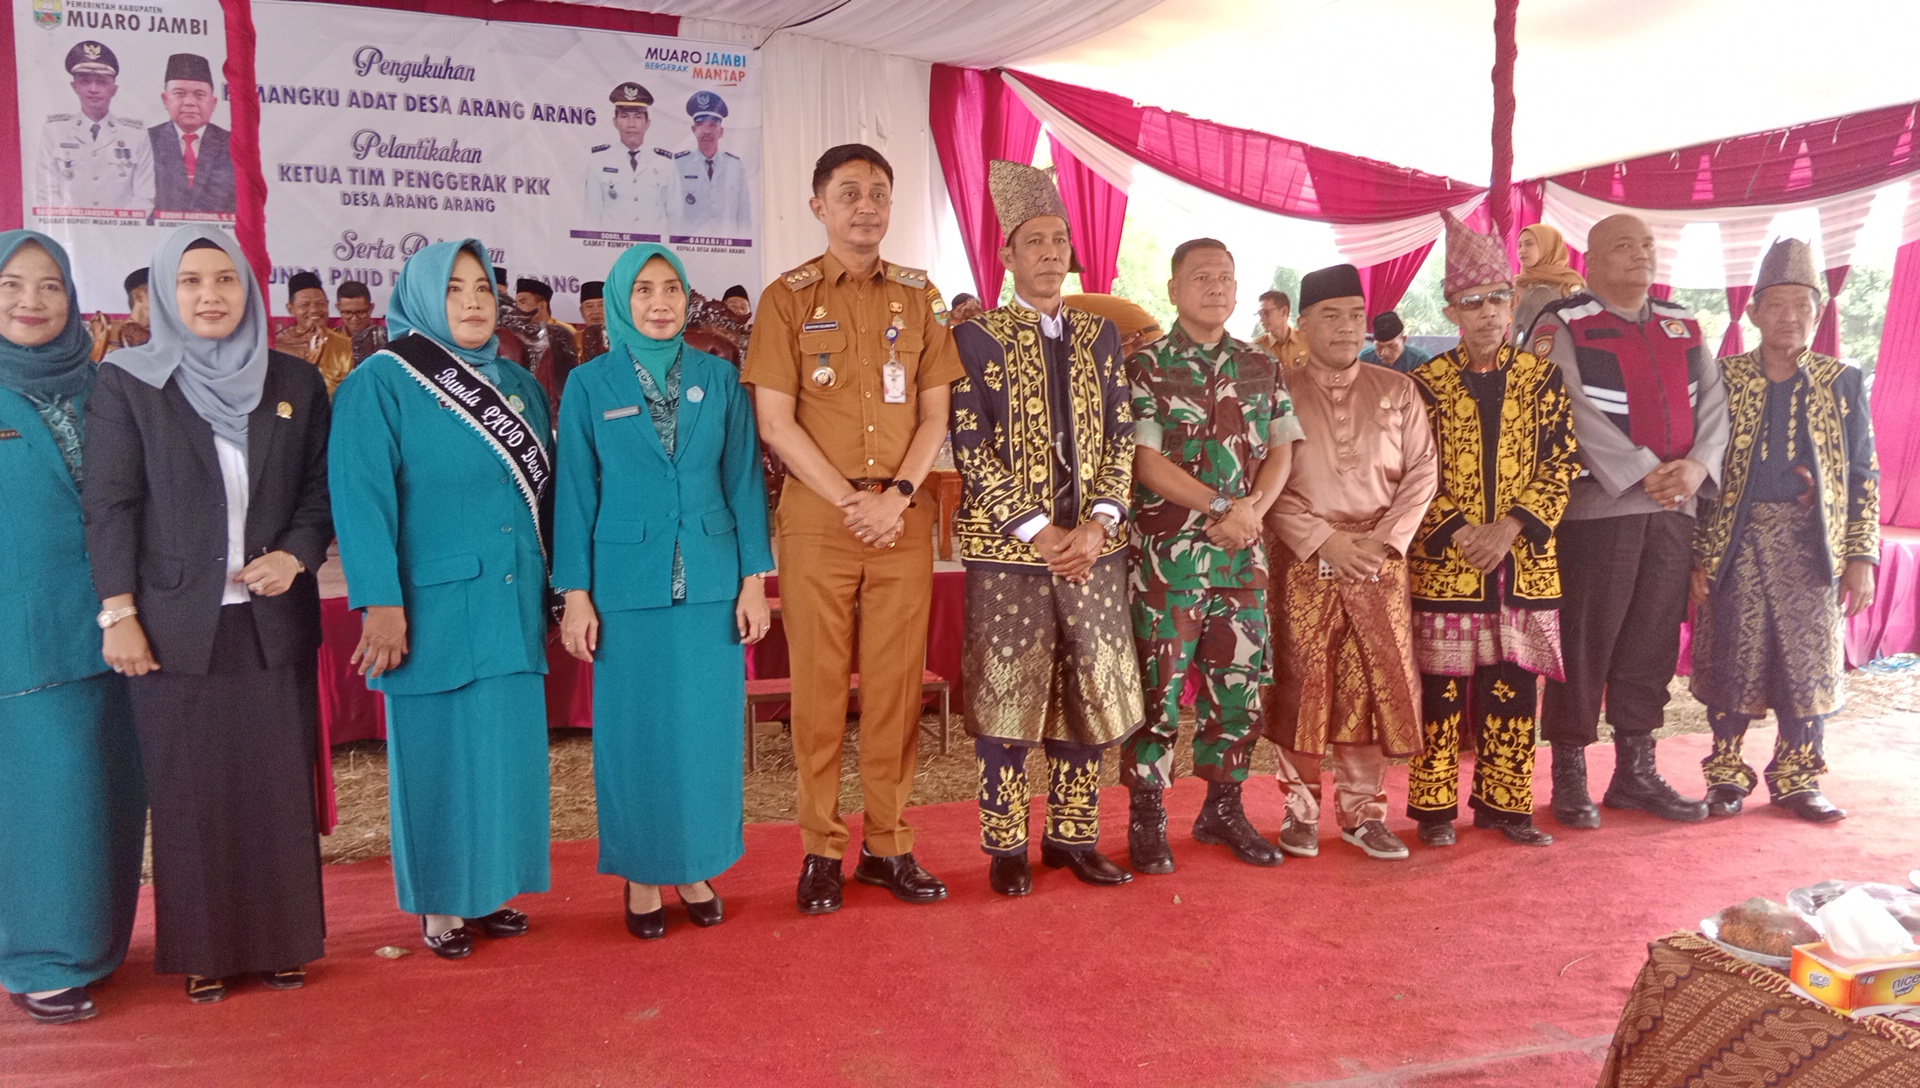 Ade Irma dan Amiruddin Anggota DPRD Muaro Jambi Dapil Kumpe Hadirin Pengukuhan Pemangku Adat Melayu Desa Arang-arang